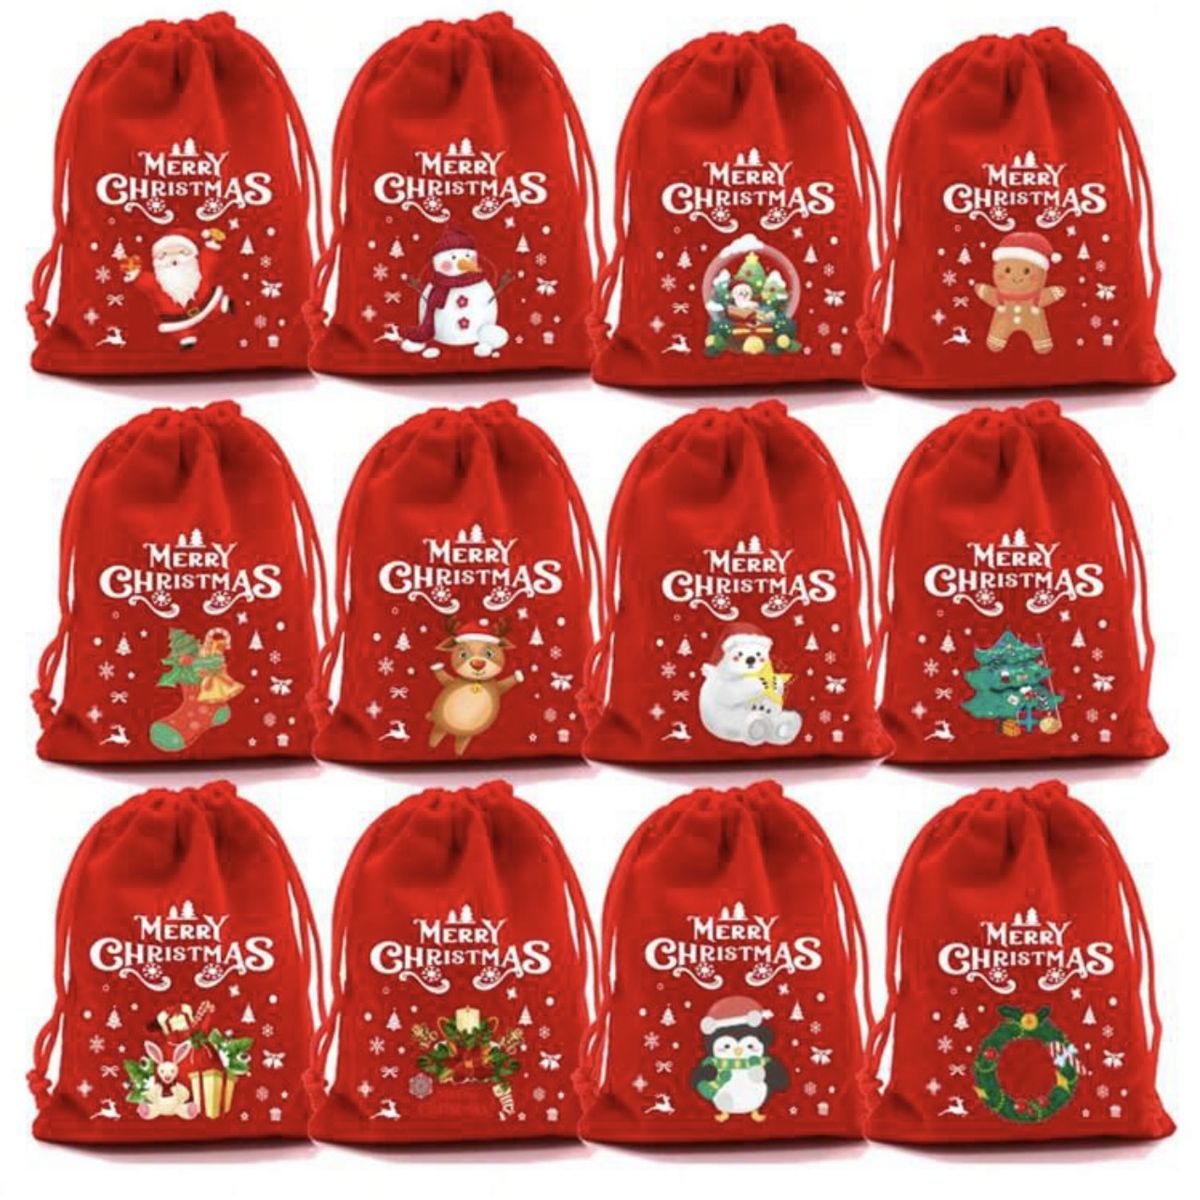 12pcs Gift Bags - Mixed Style Christmas Sacks